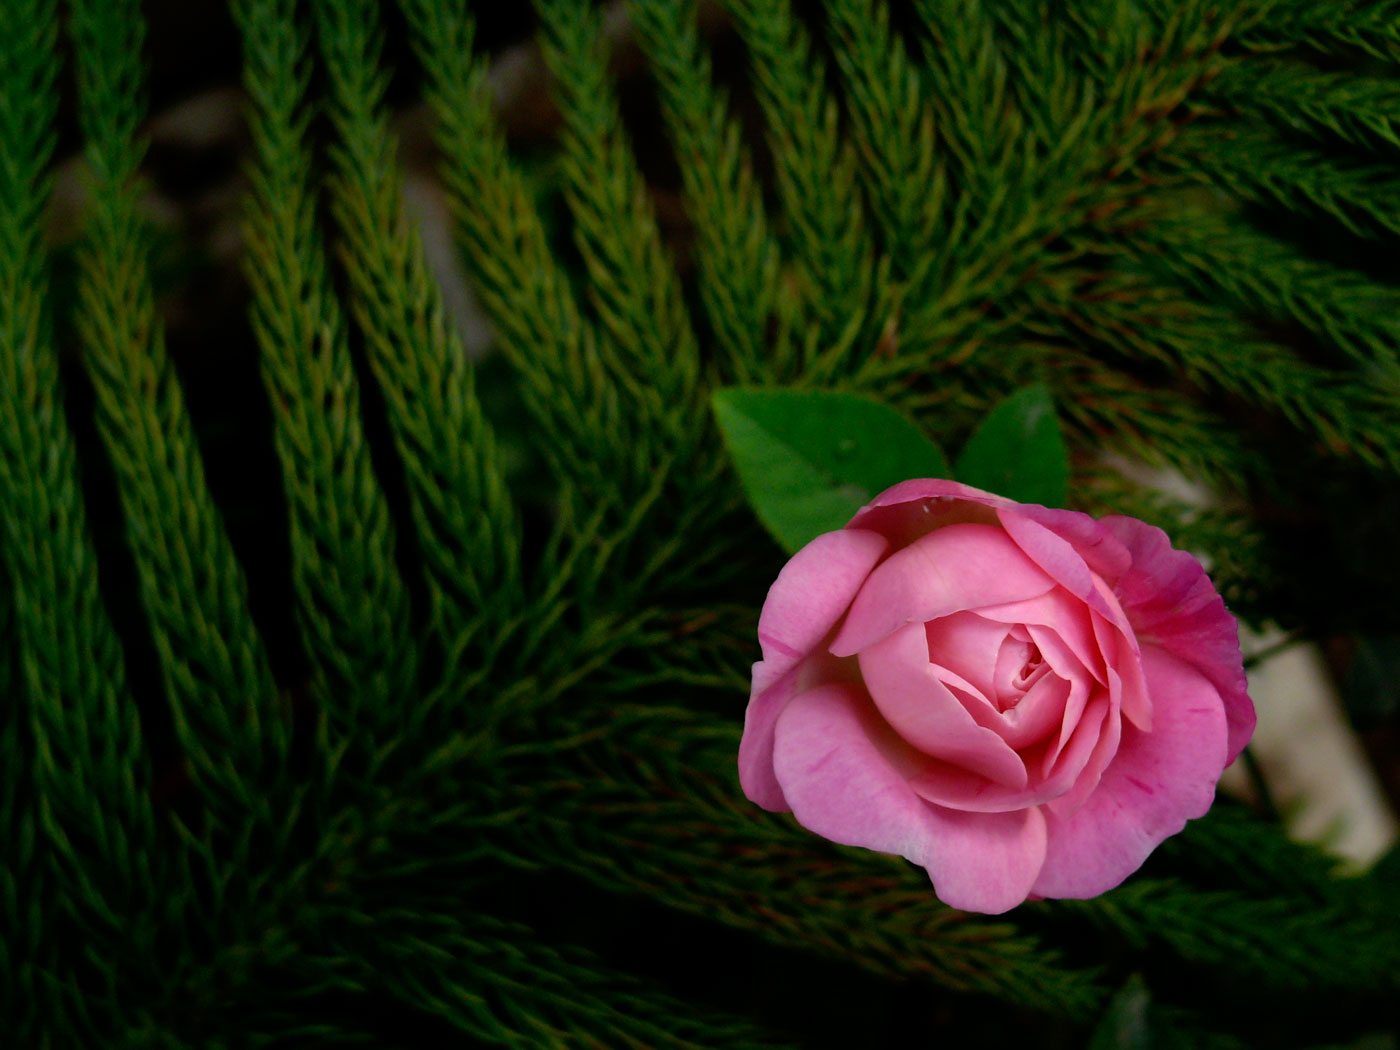 A pink rose, copyright Picturejockey : Navin Harish 2005-2013